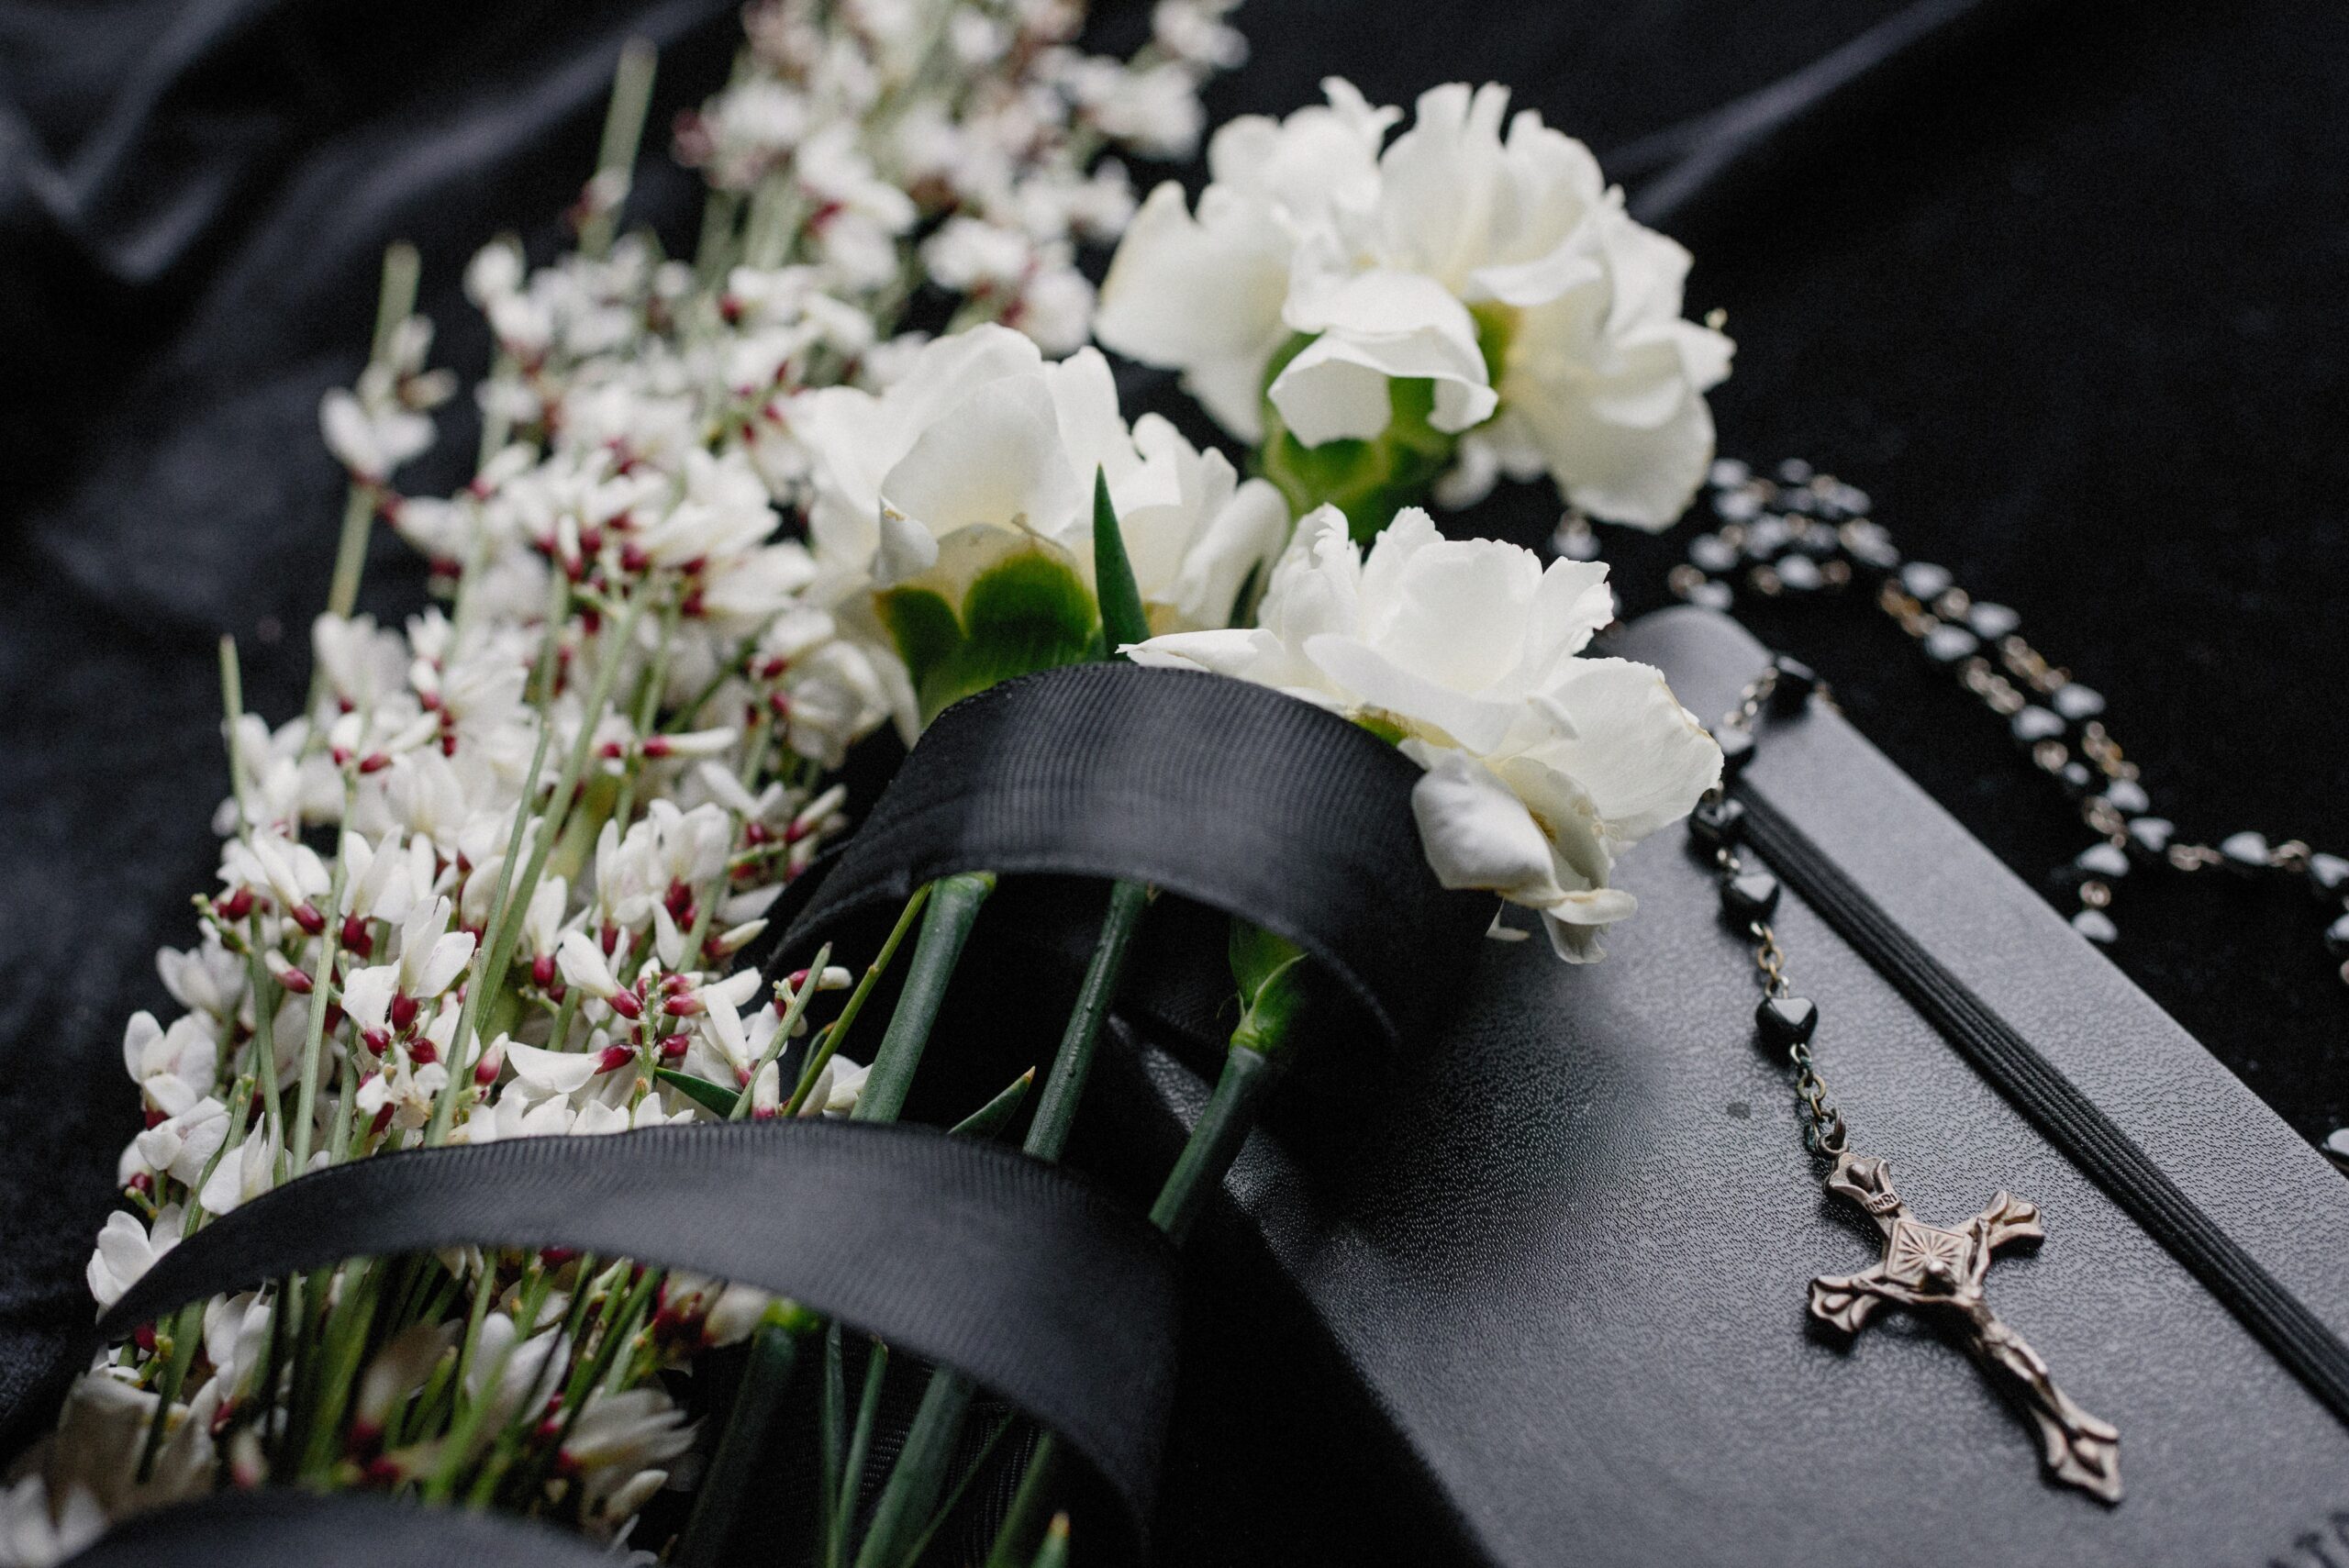 Vita begravningsblommor med svart begravningsband på kistan